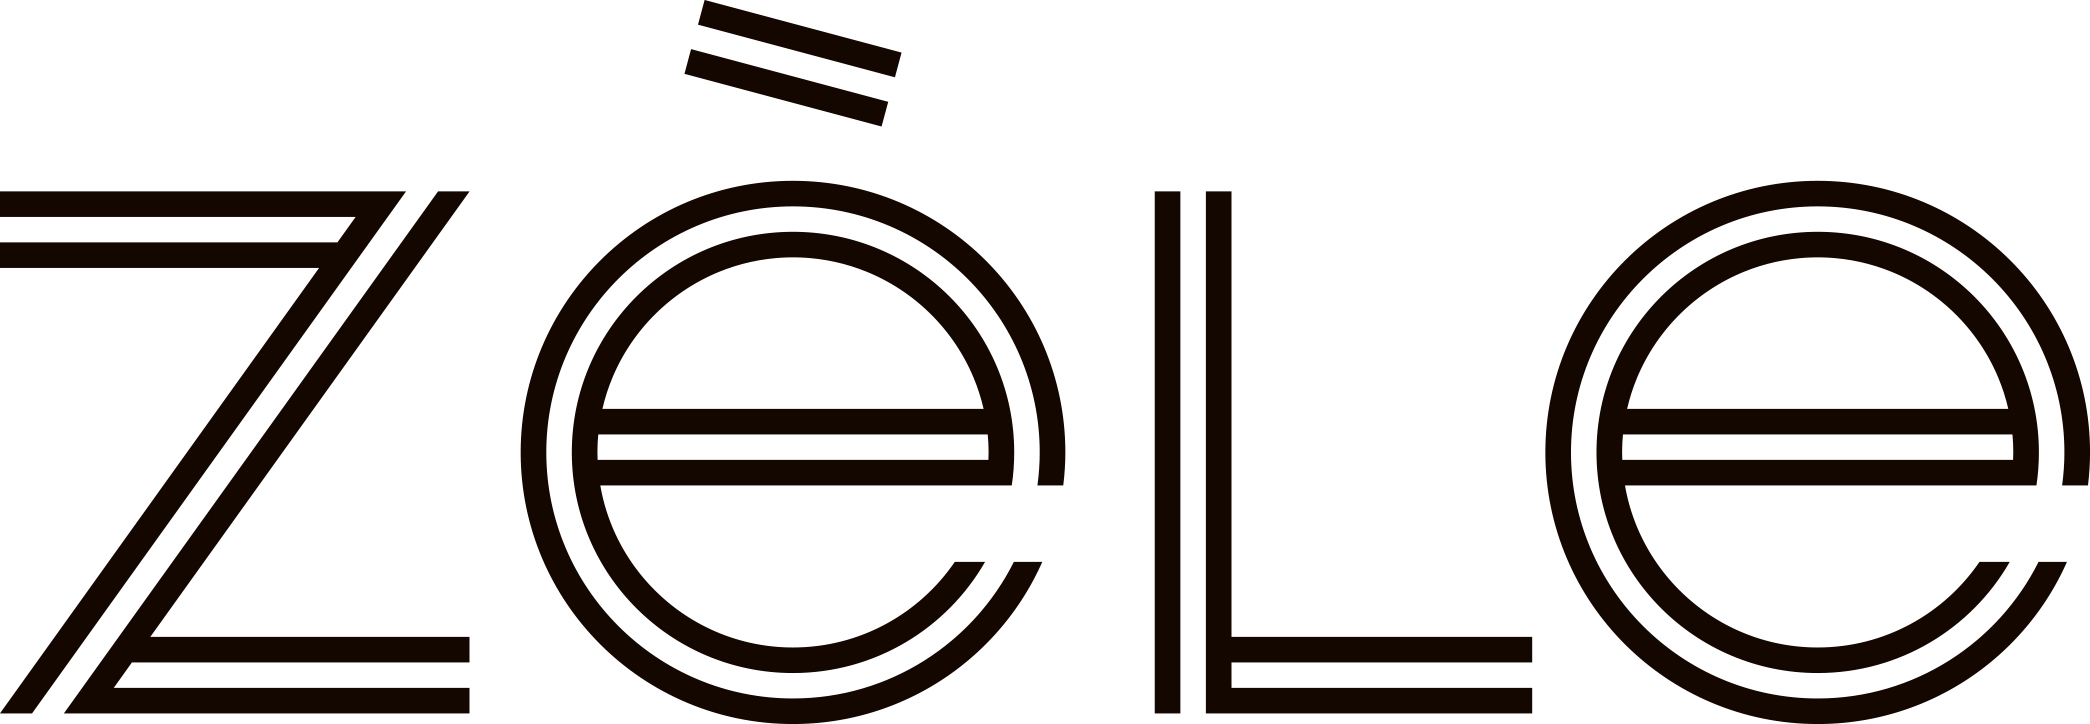 zele-logo.jpg